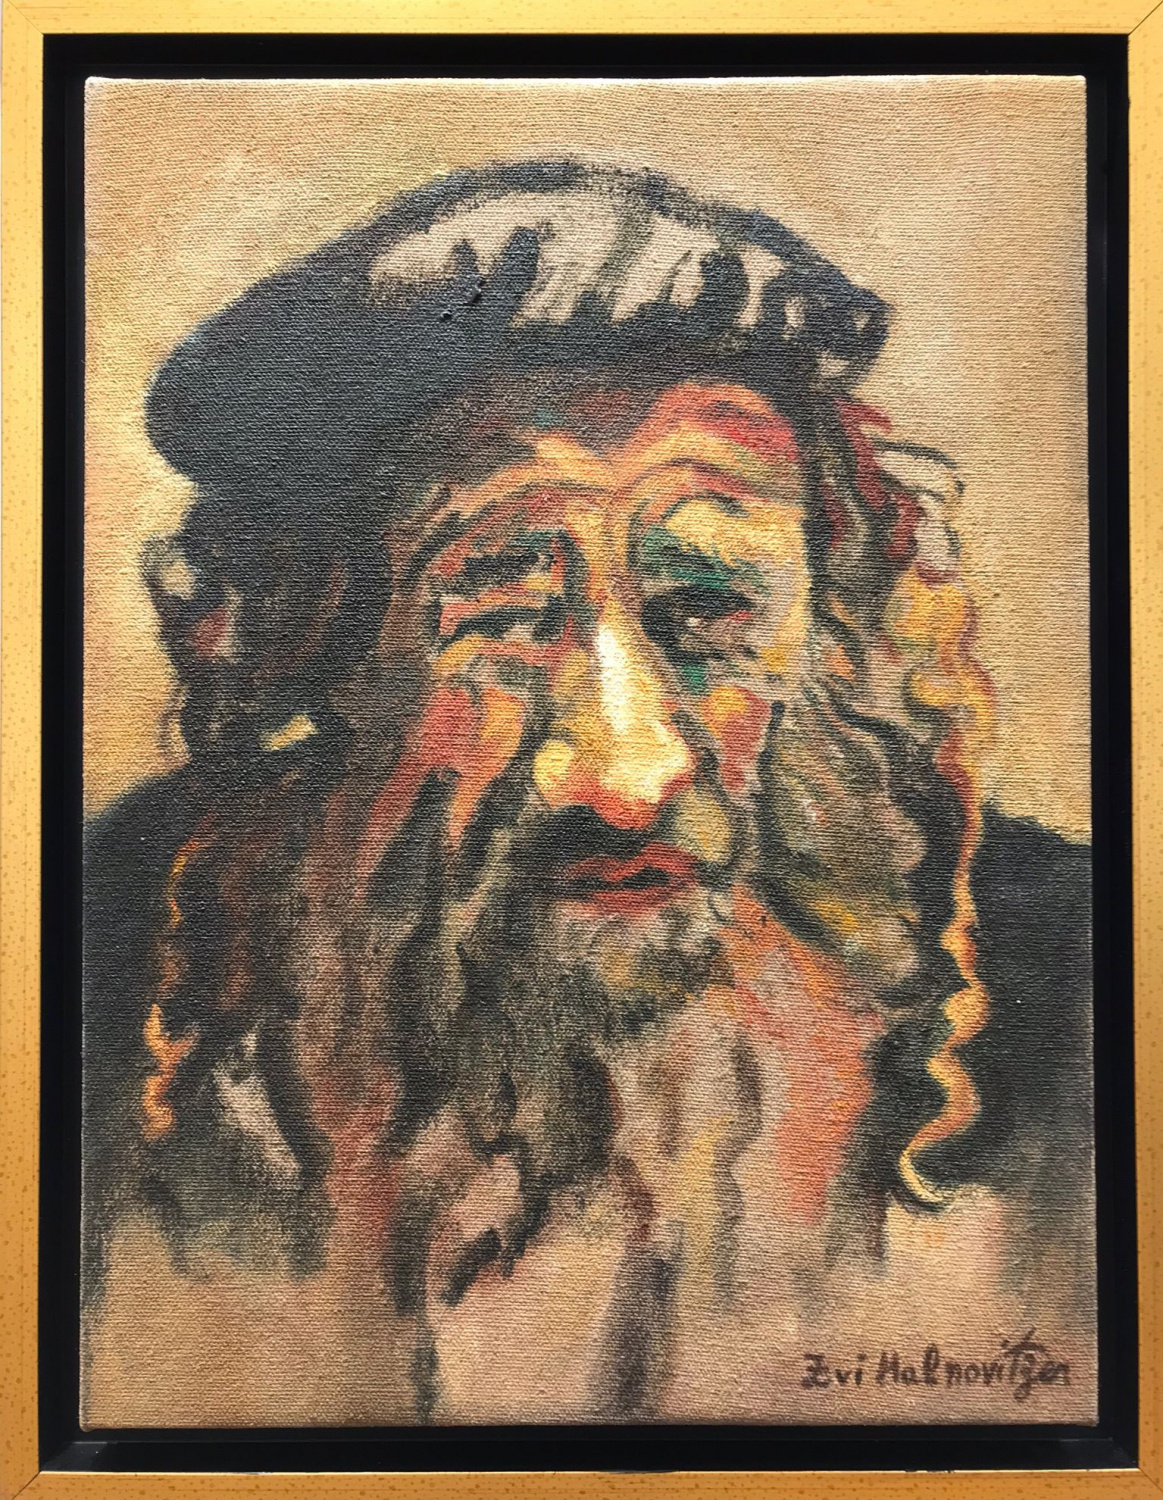 Zvi Malnovitzer - Portrait - Kings Gallery - Gallery in Jerusalem - Judaica - Israeli artist.